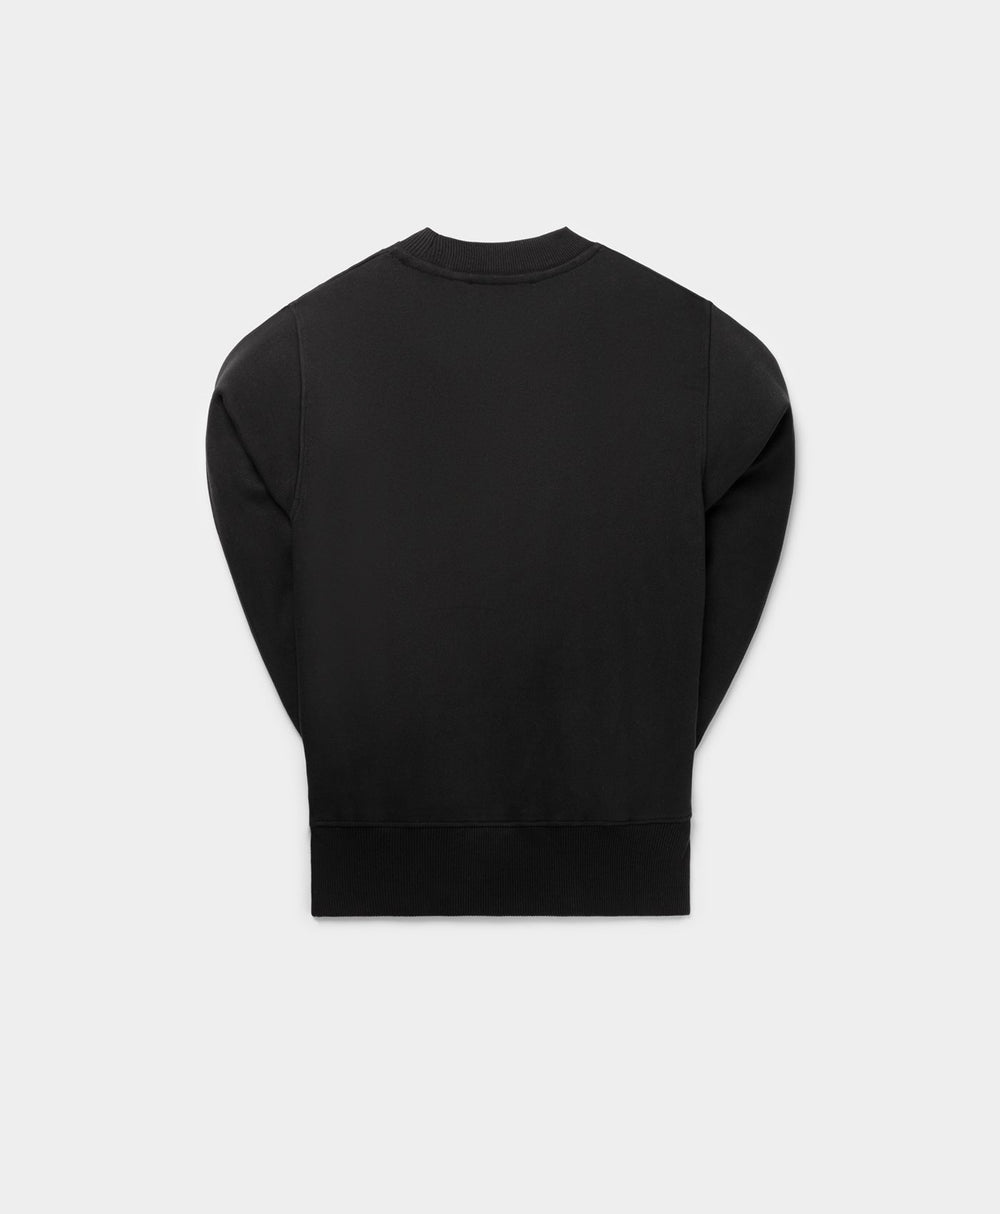 DP - Black Evvie Circle Sweater - Packshot - Rear